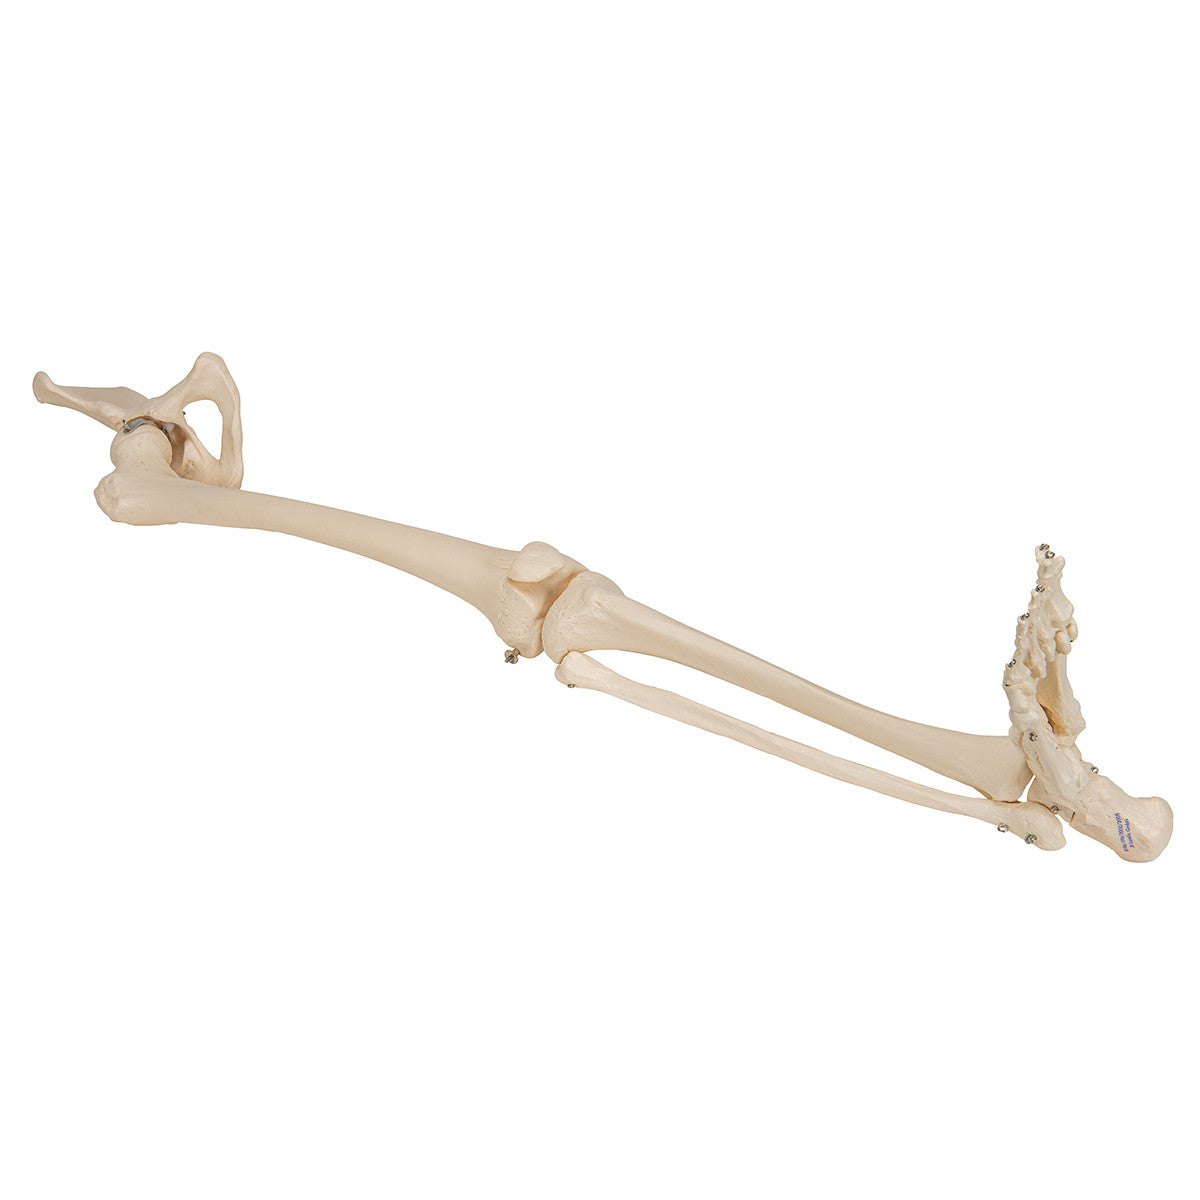 Leg Skeleton with Hip Bone | 3B Scientific A36